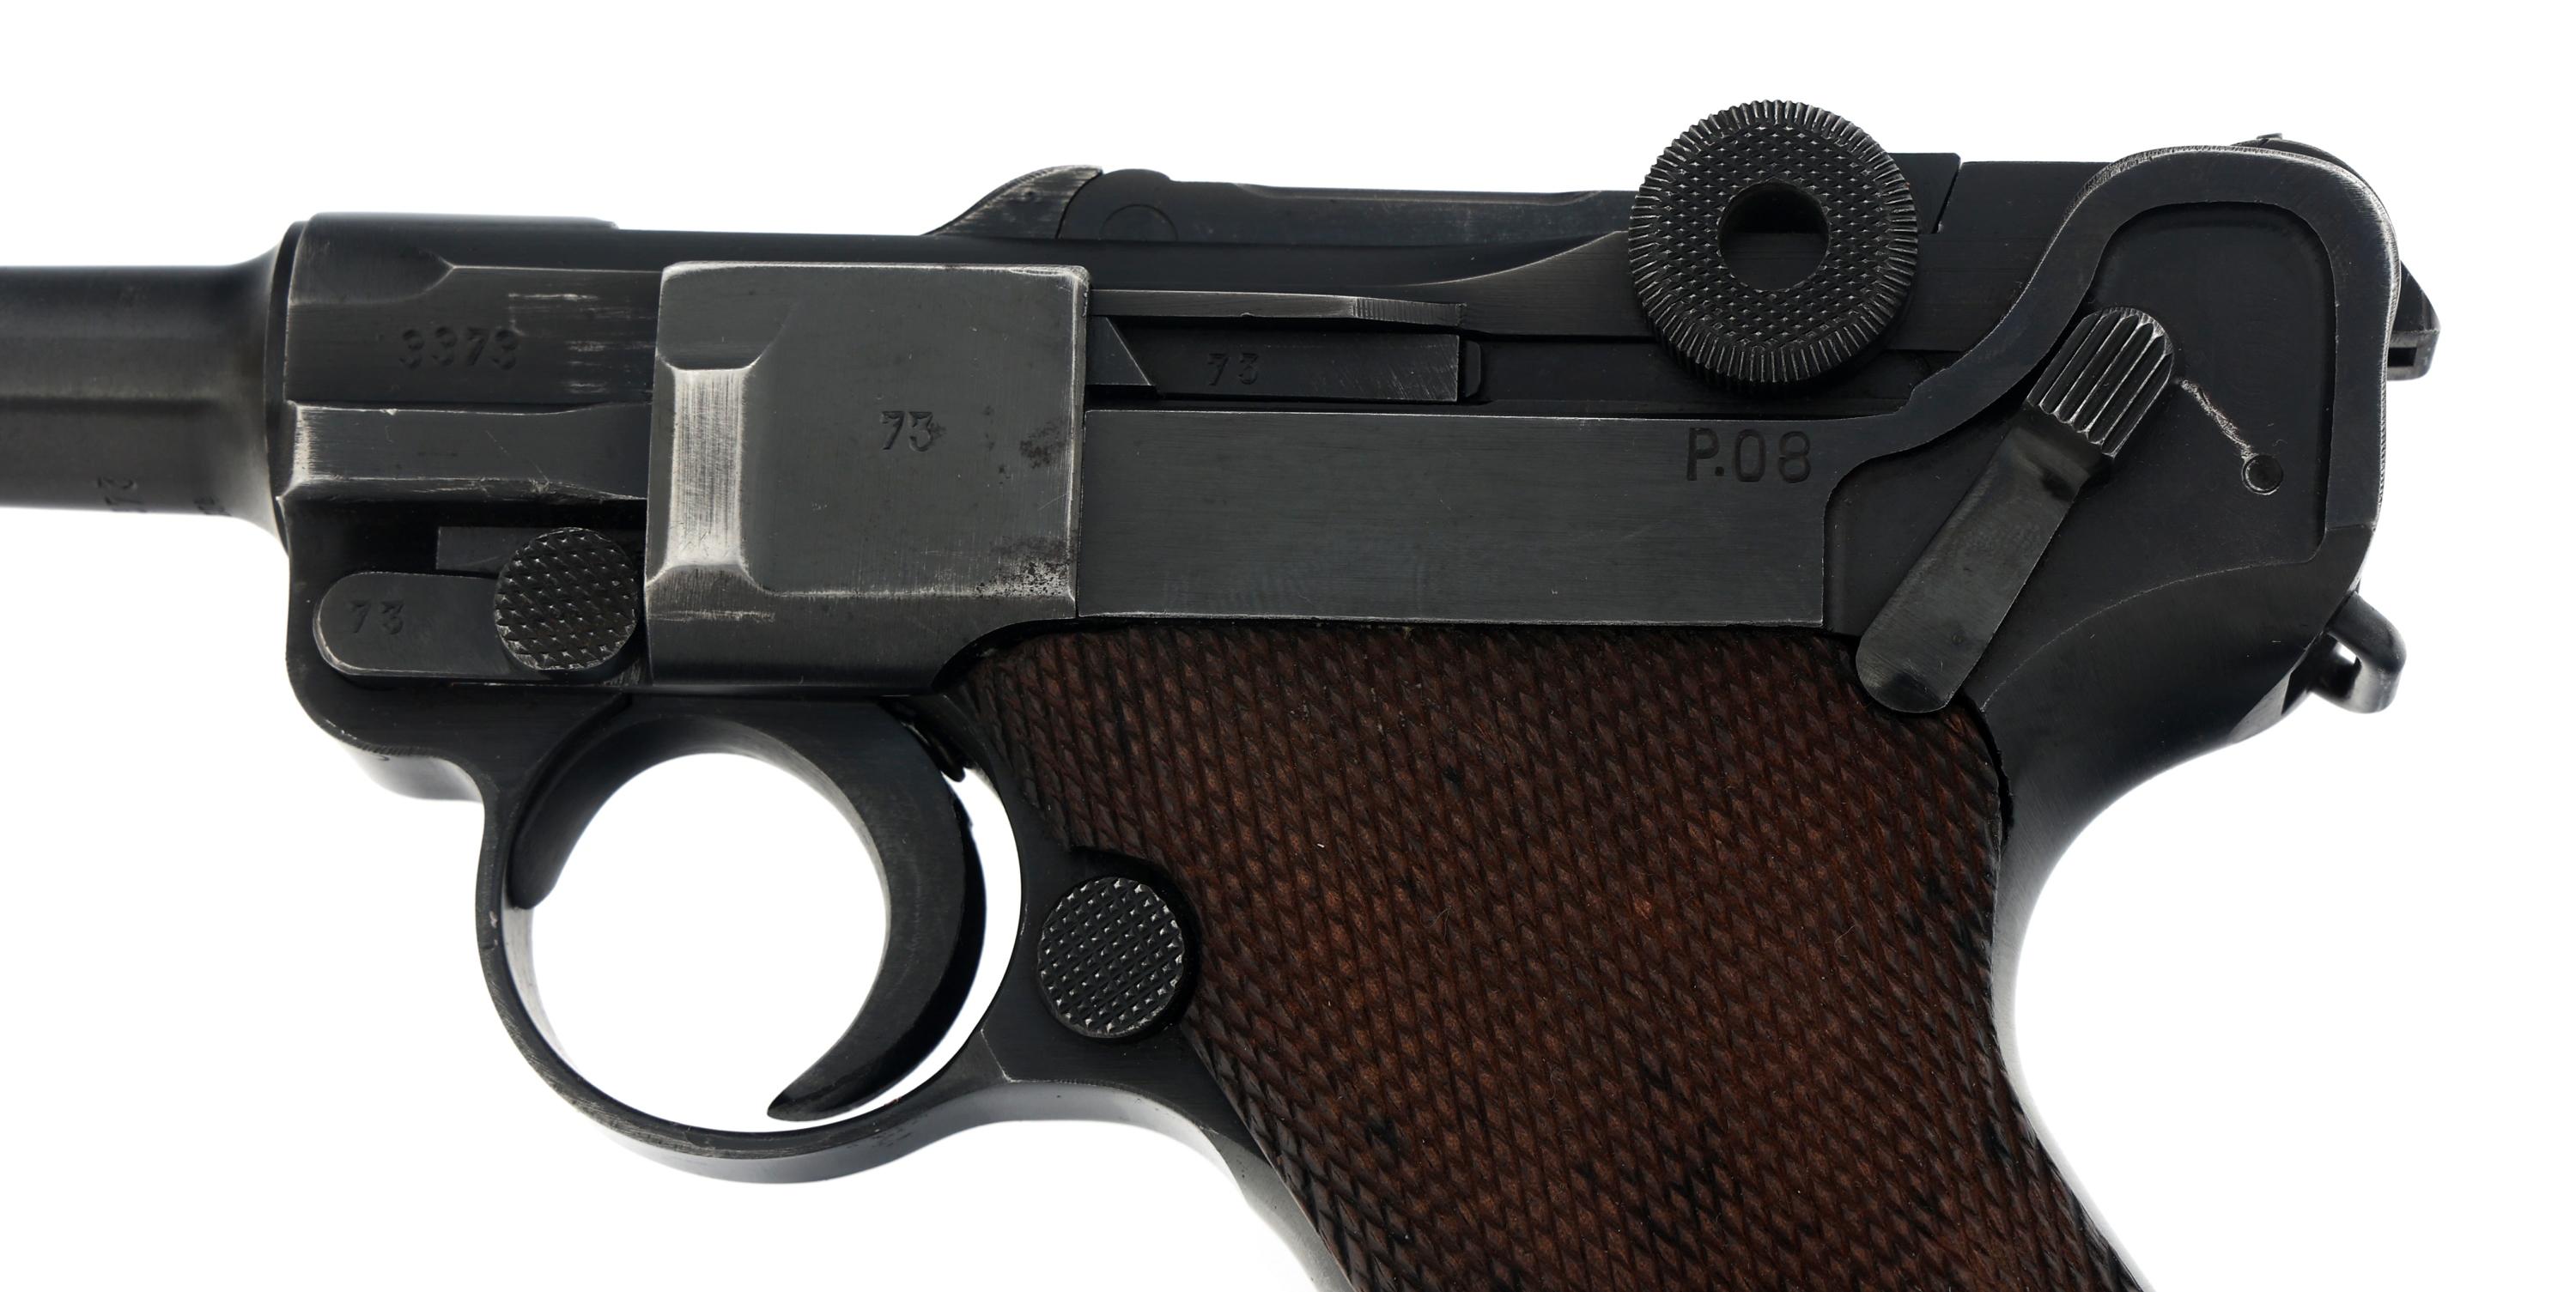 1941 GERMAN byf CODE MAUSER P08 9mm LUGER PISTOL